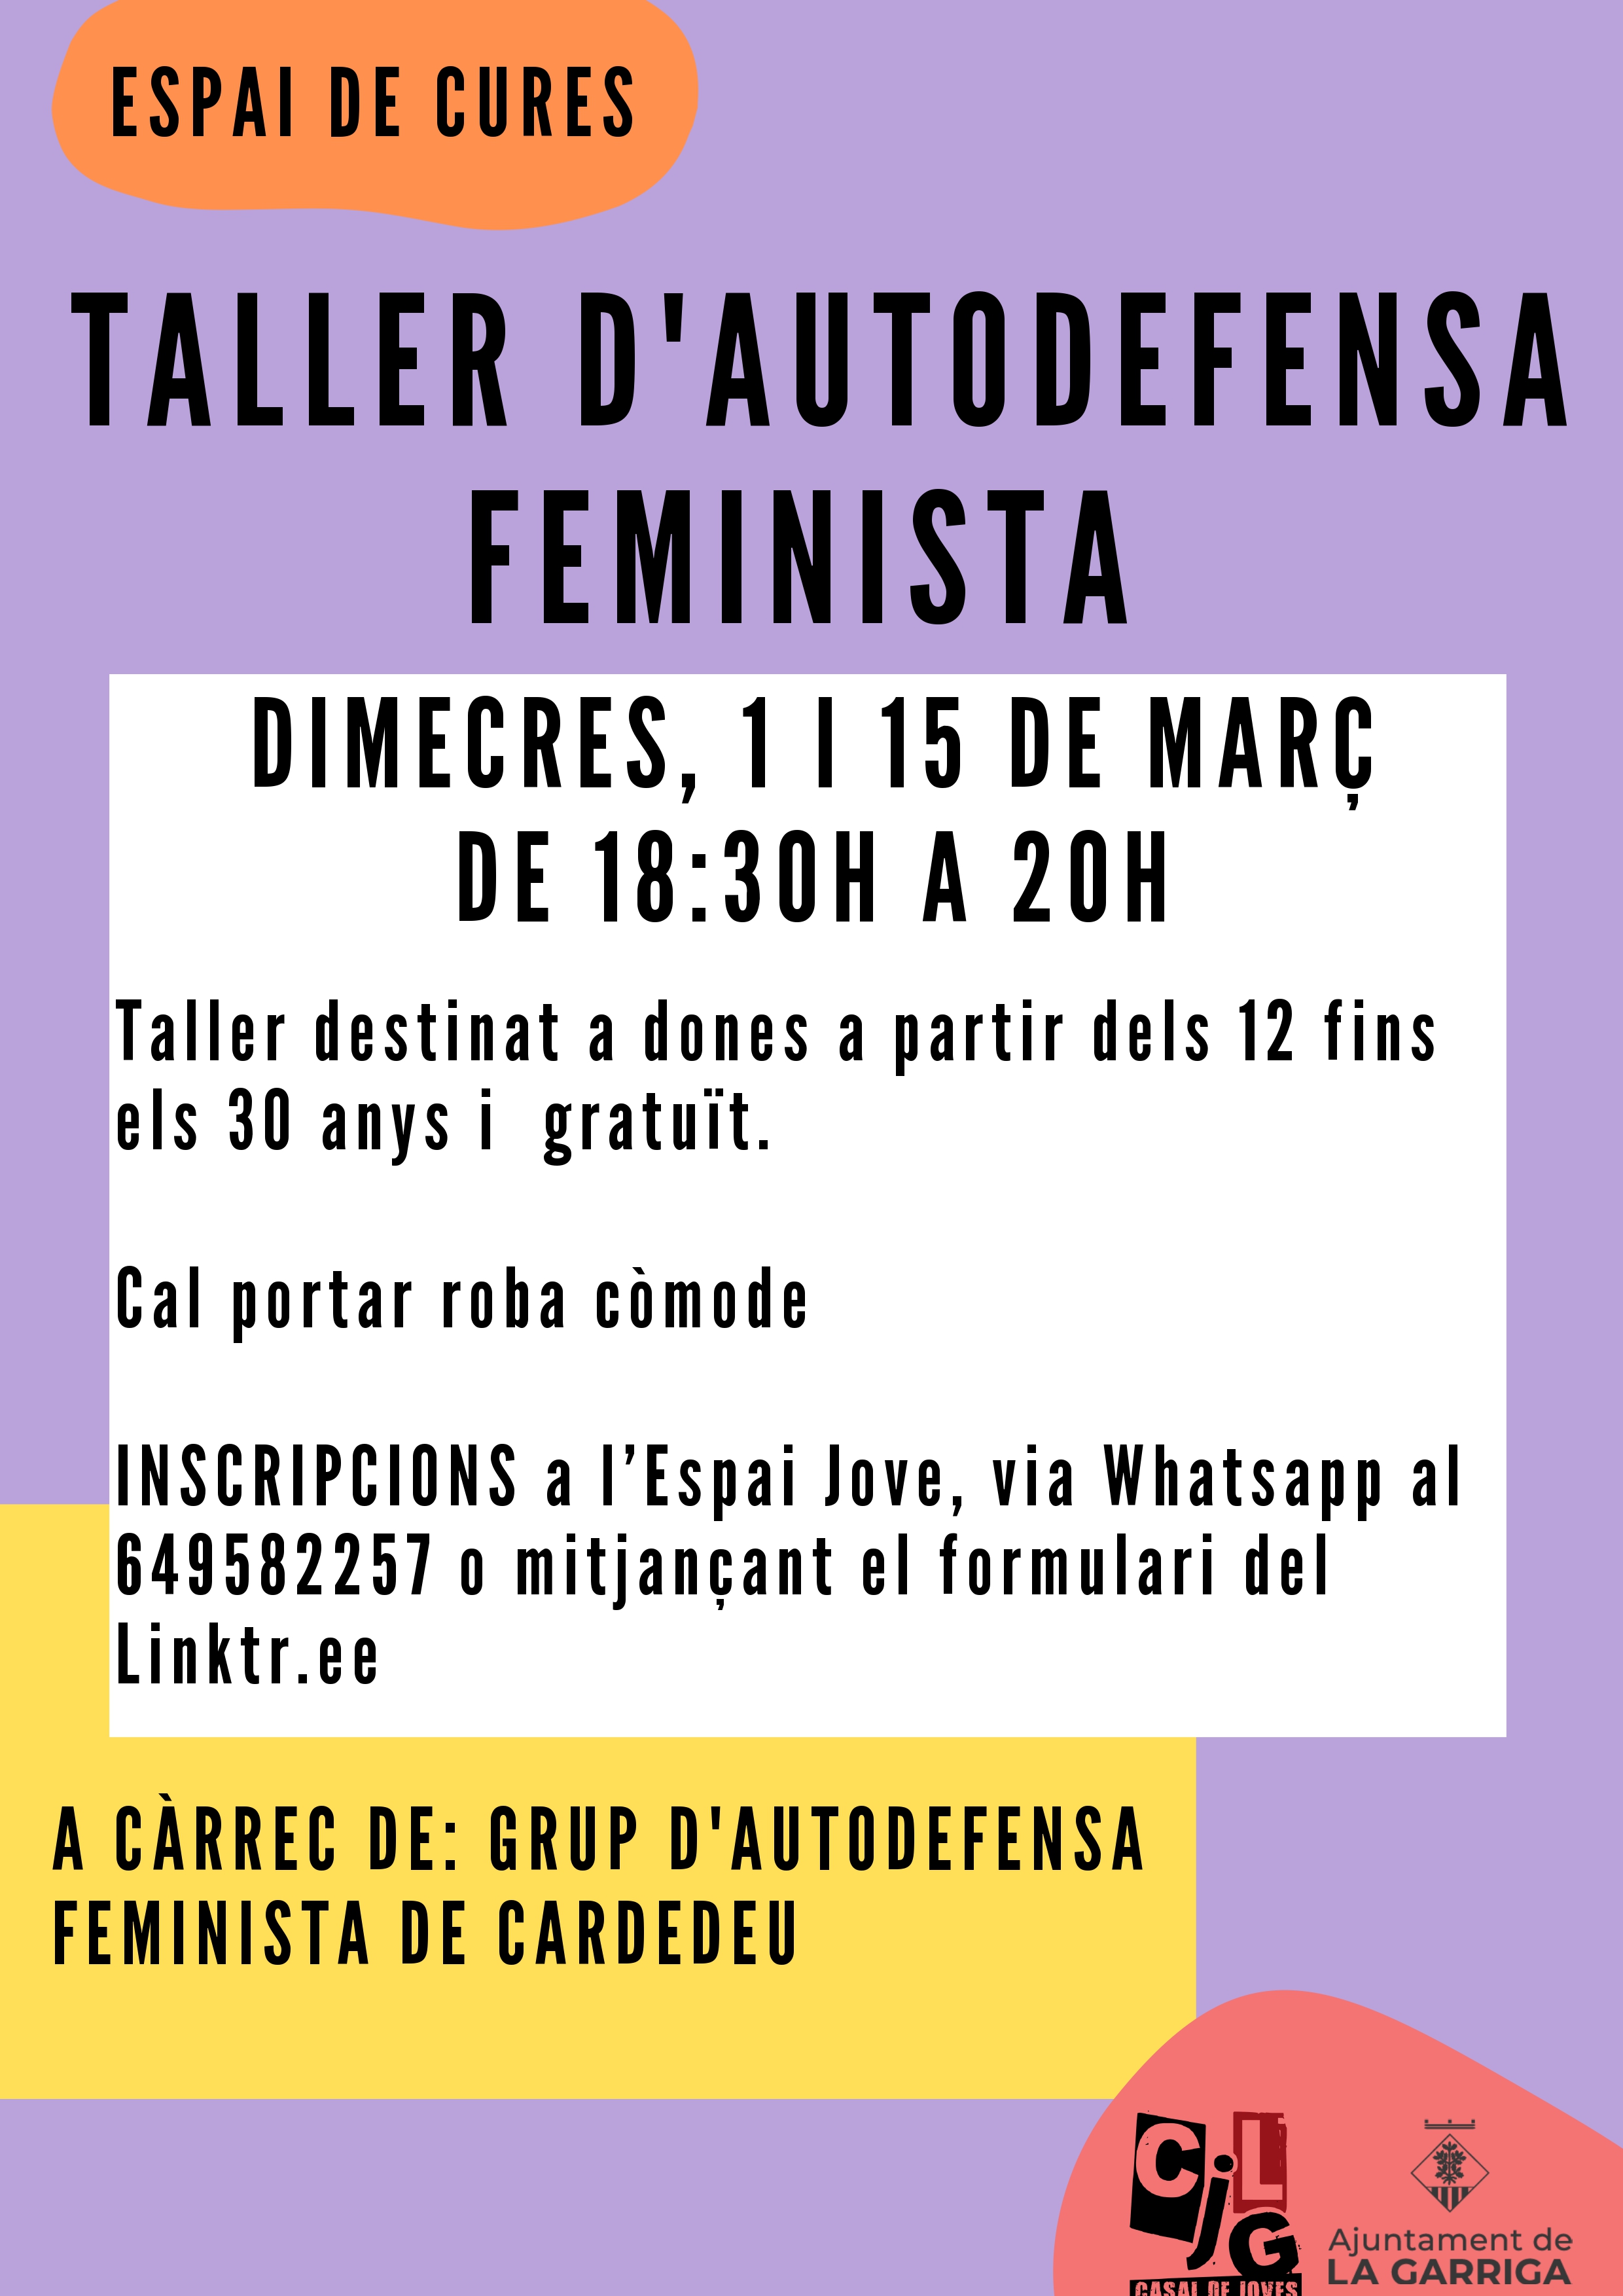 Taller d'autodefensa feminista 8M la Garriga